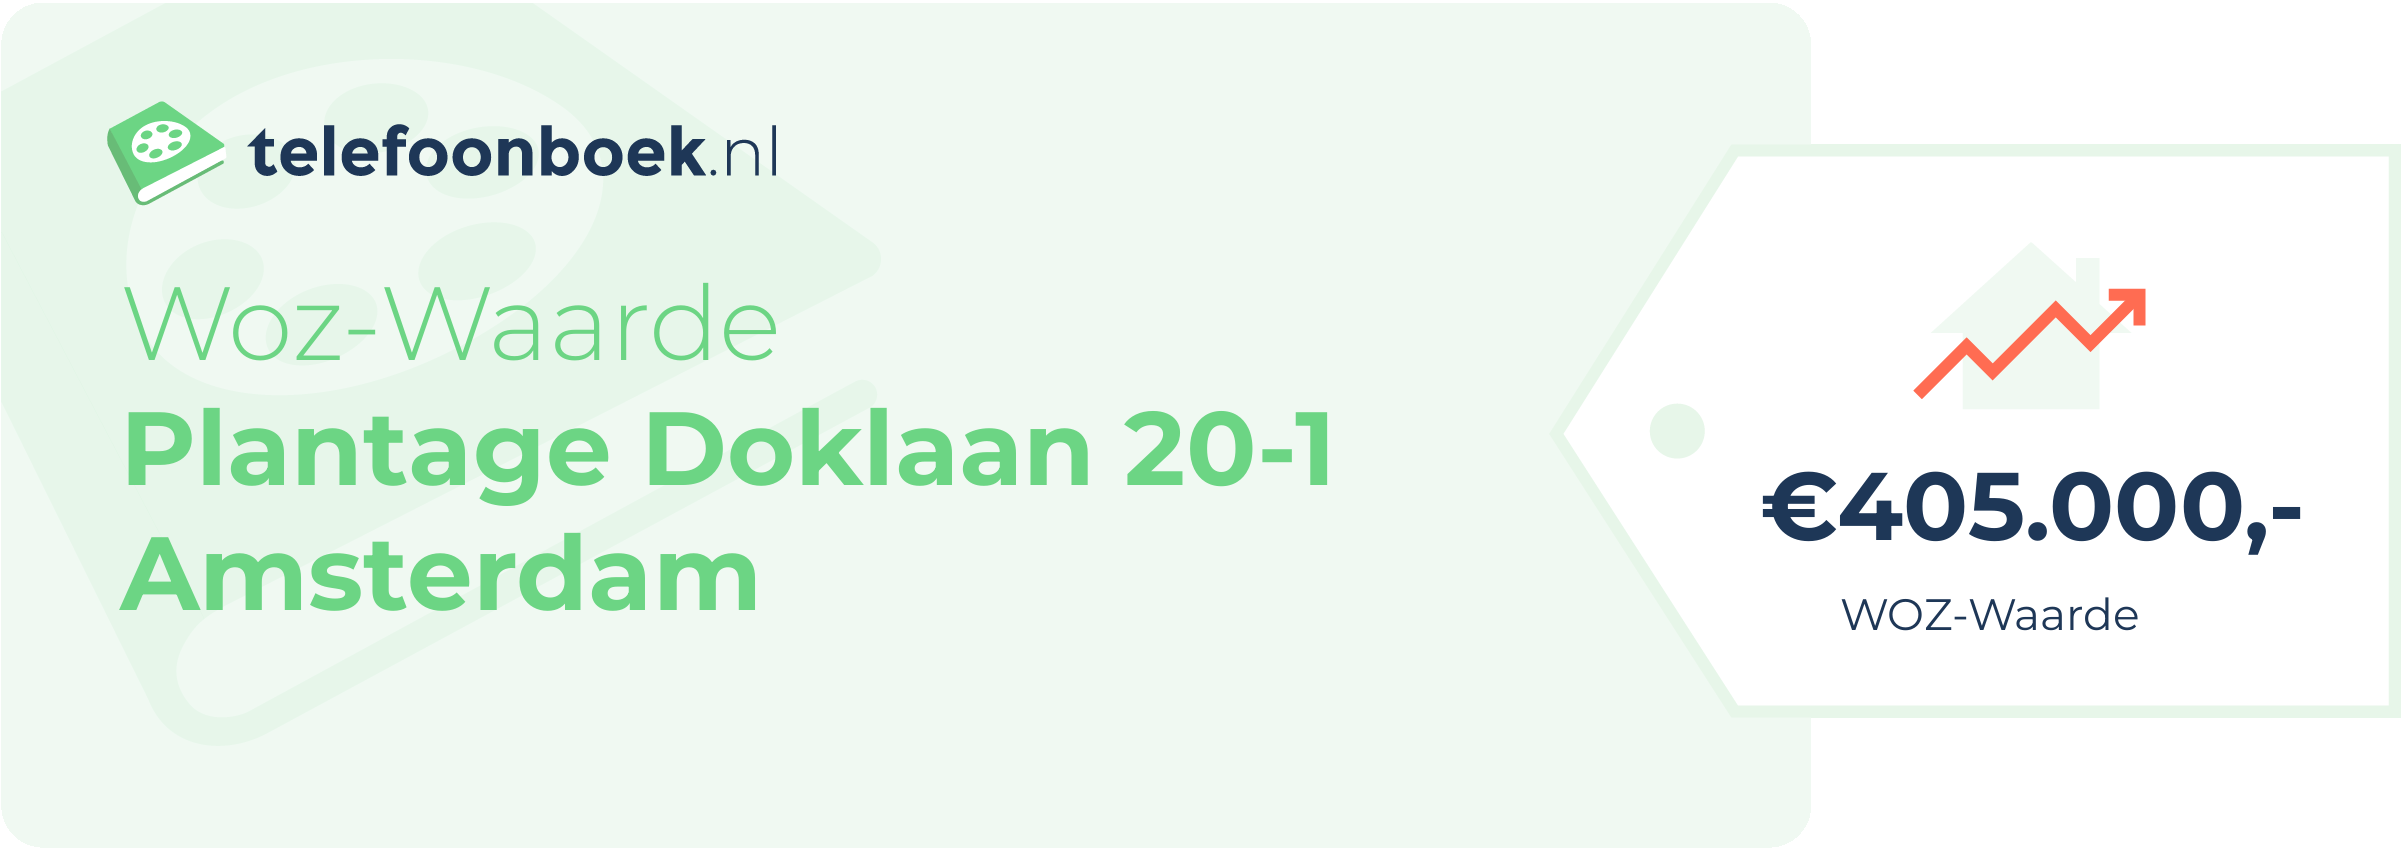 WOZ-waarde Plantage Doklaan 20-1 Amsterdam